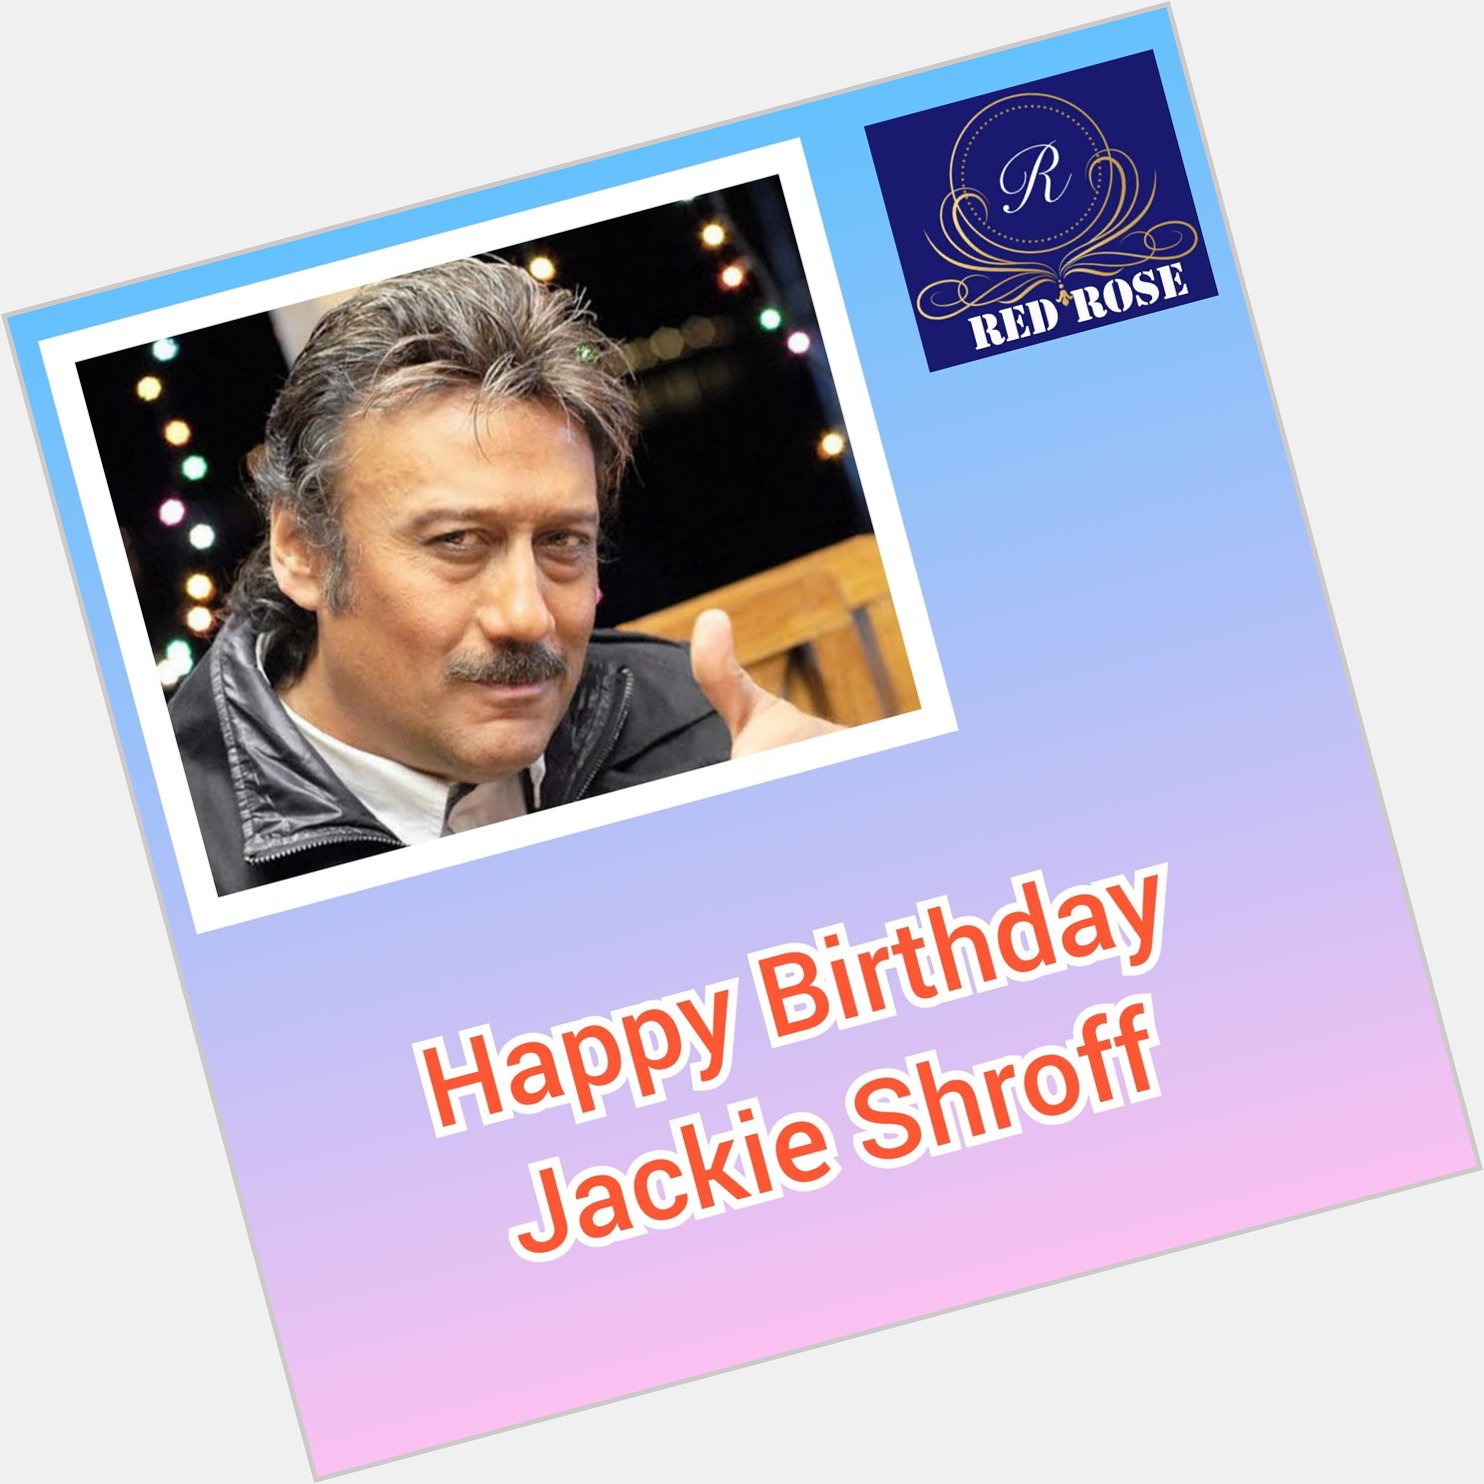 Happy Birthday Jackie Shroff  